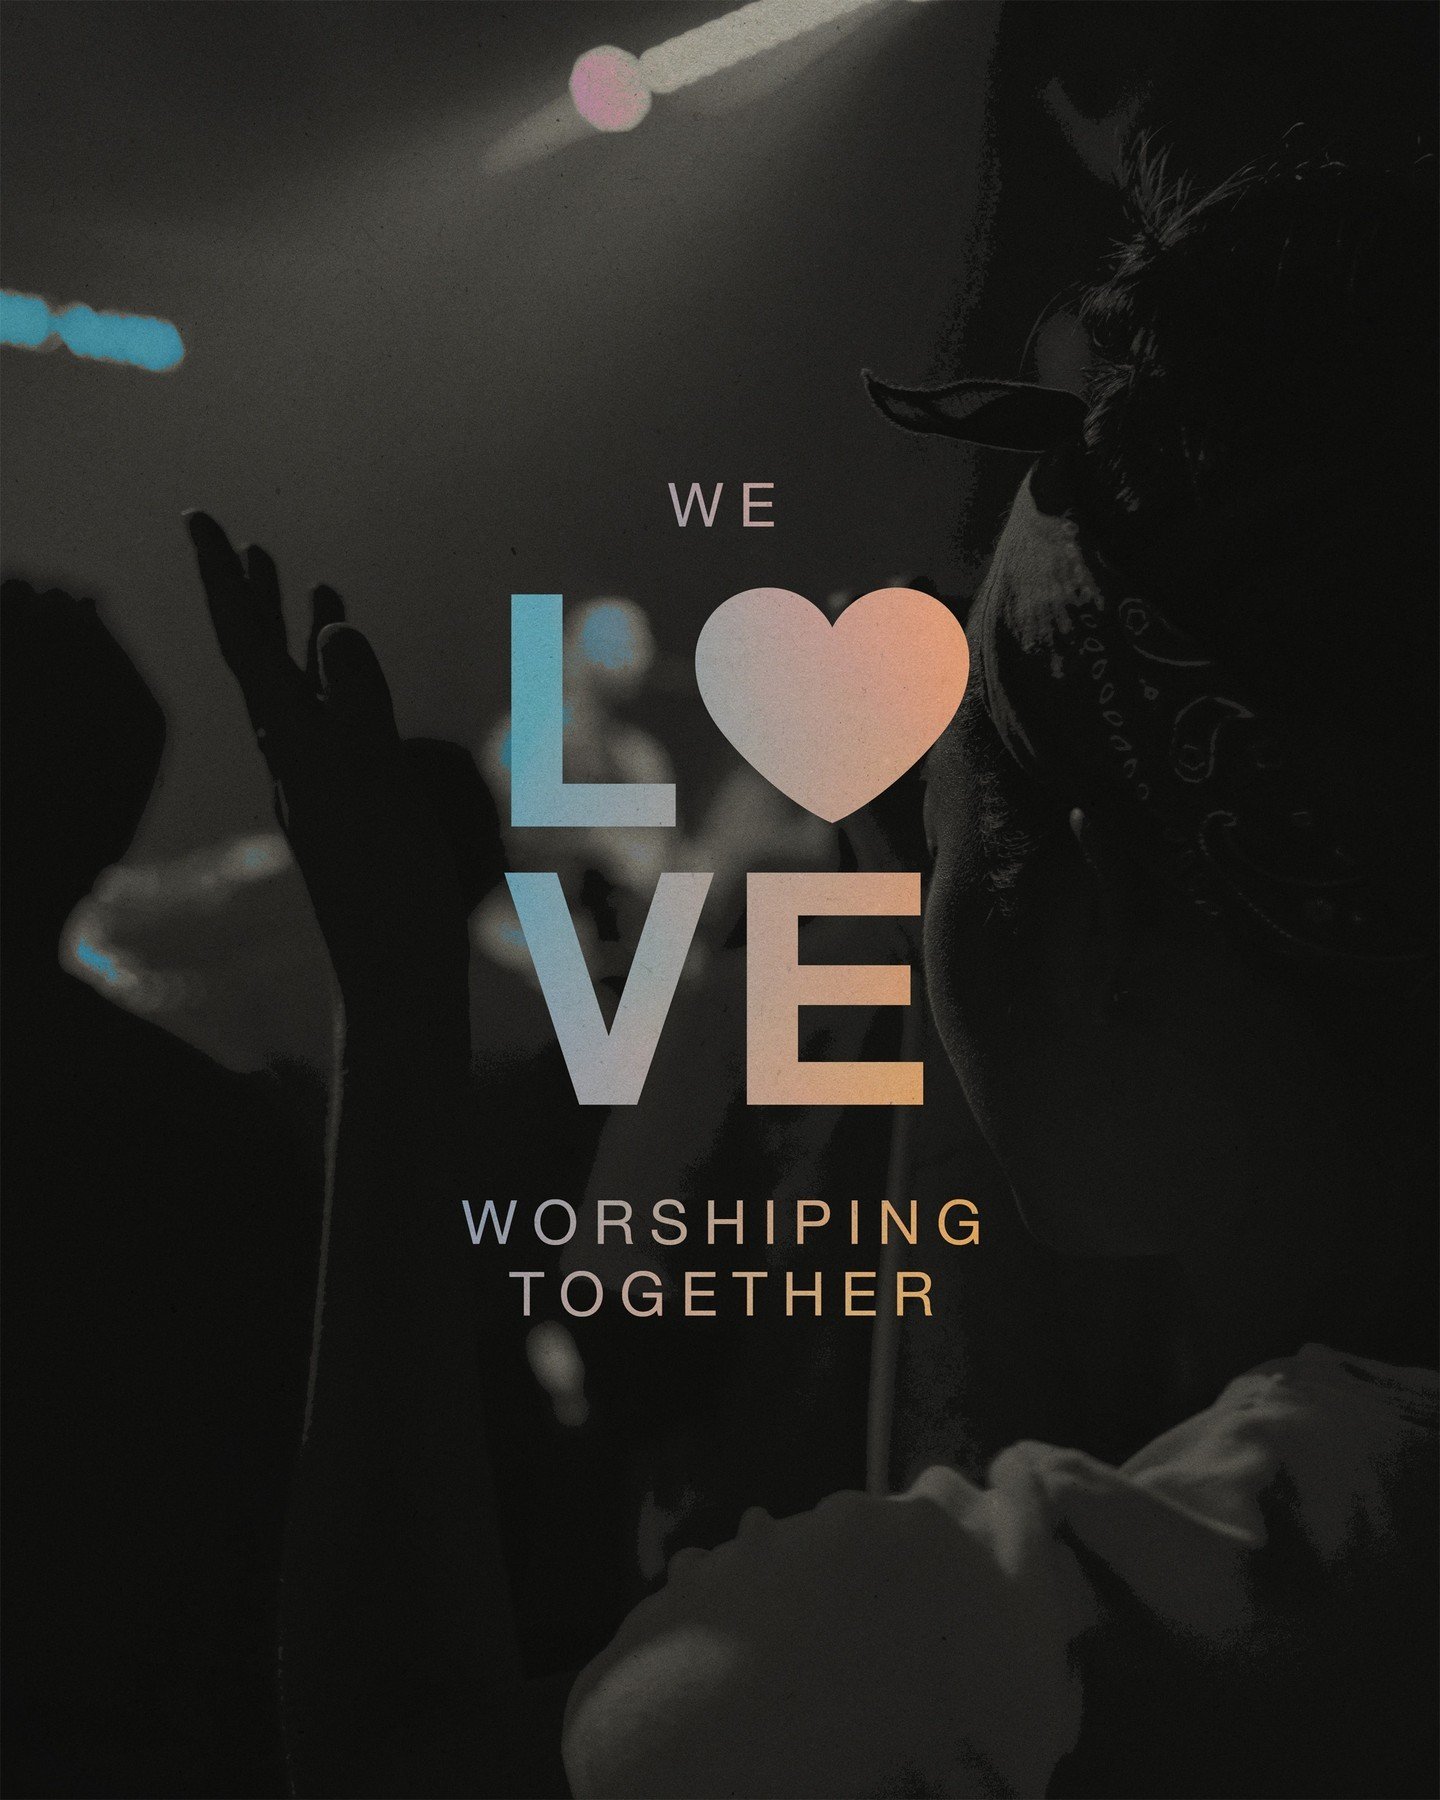 We love worshipping together!
.
.
.
#church #god #morning #jesus #christ #love #christian #sunday #service #worship #christianlife